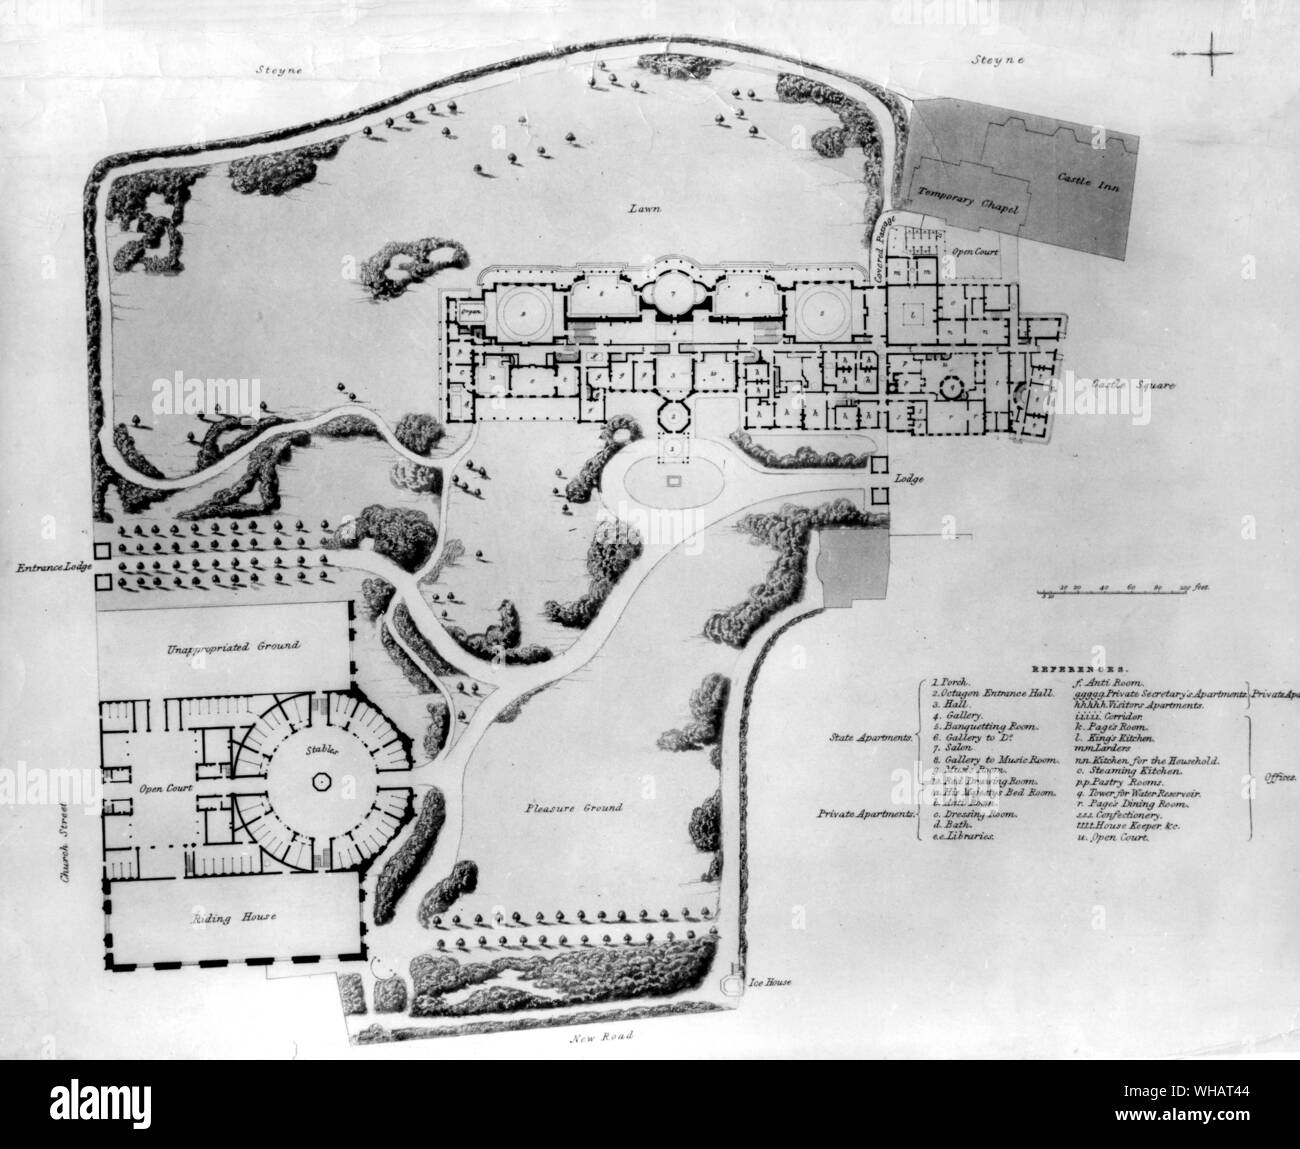 Plan of Brighton Pavilion from John Nash's Brighton Pavilion 1820-25. Stock Photo